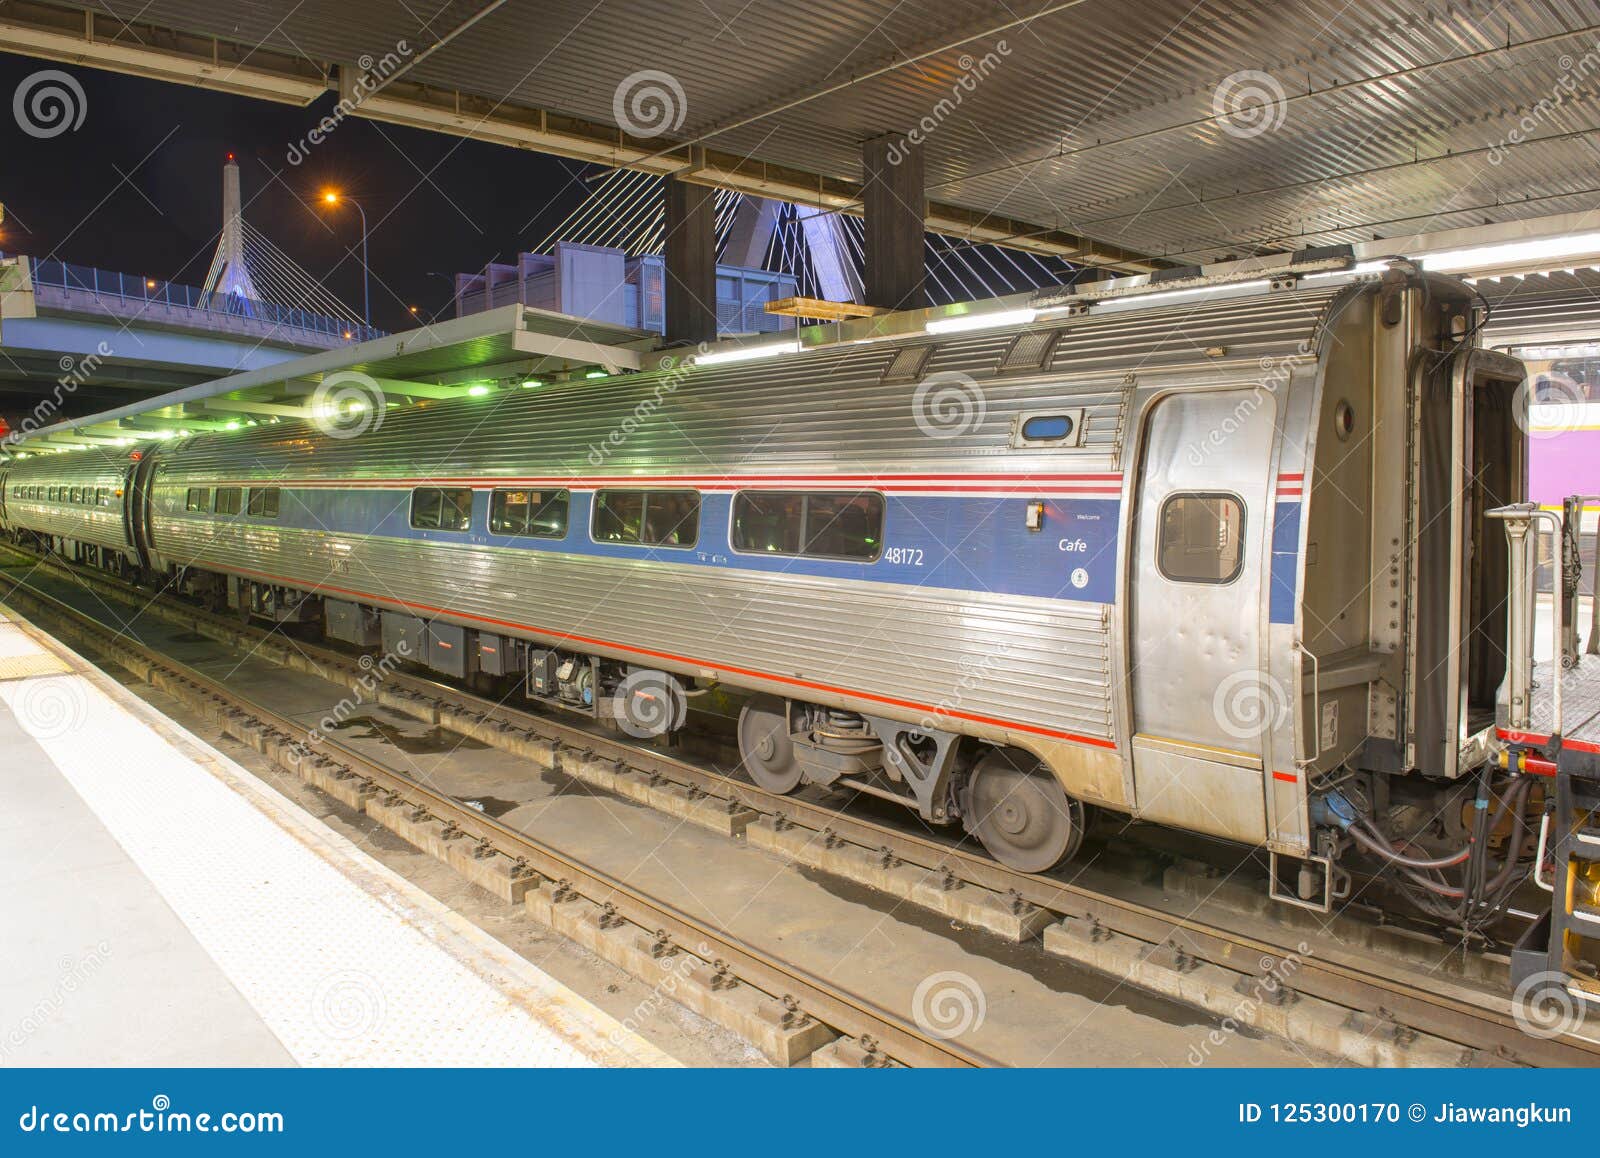 Amtrak Train in Boston, Massachusetts, USA Editorial Image - Image of ...